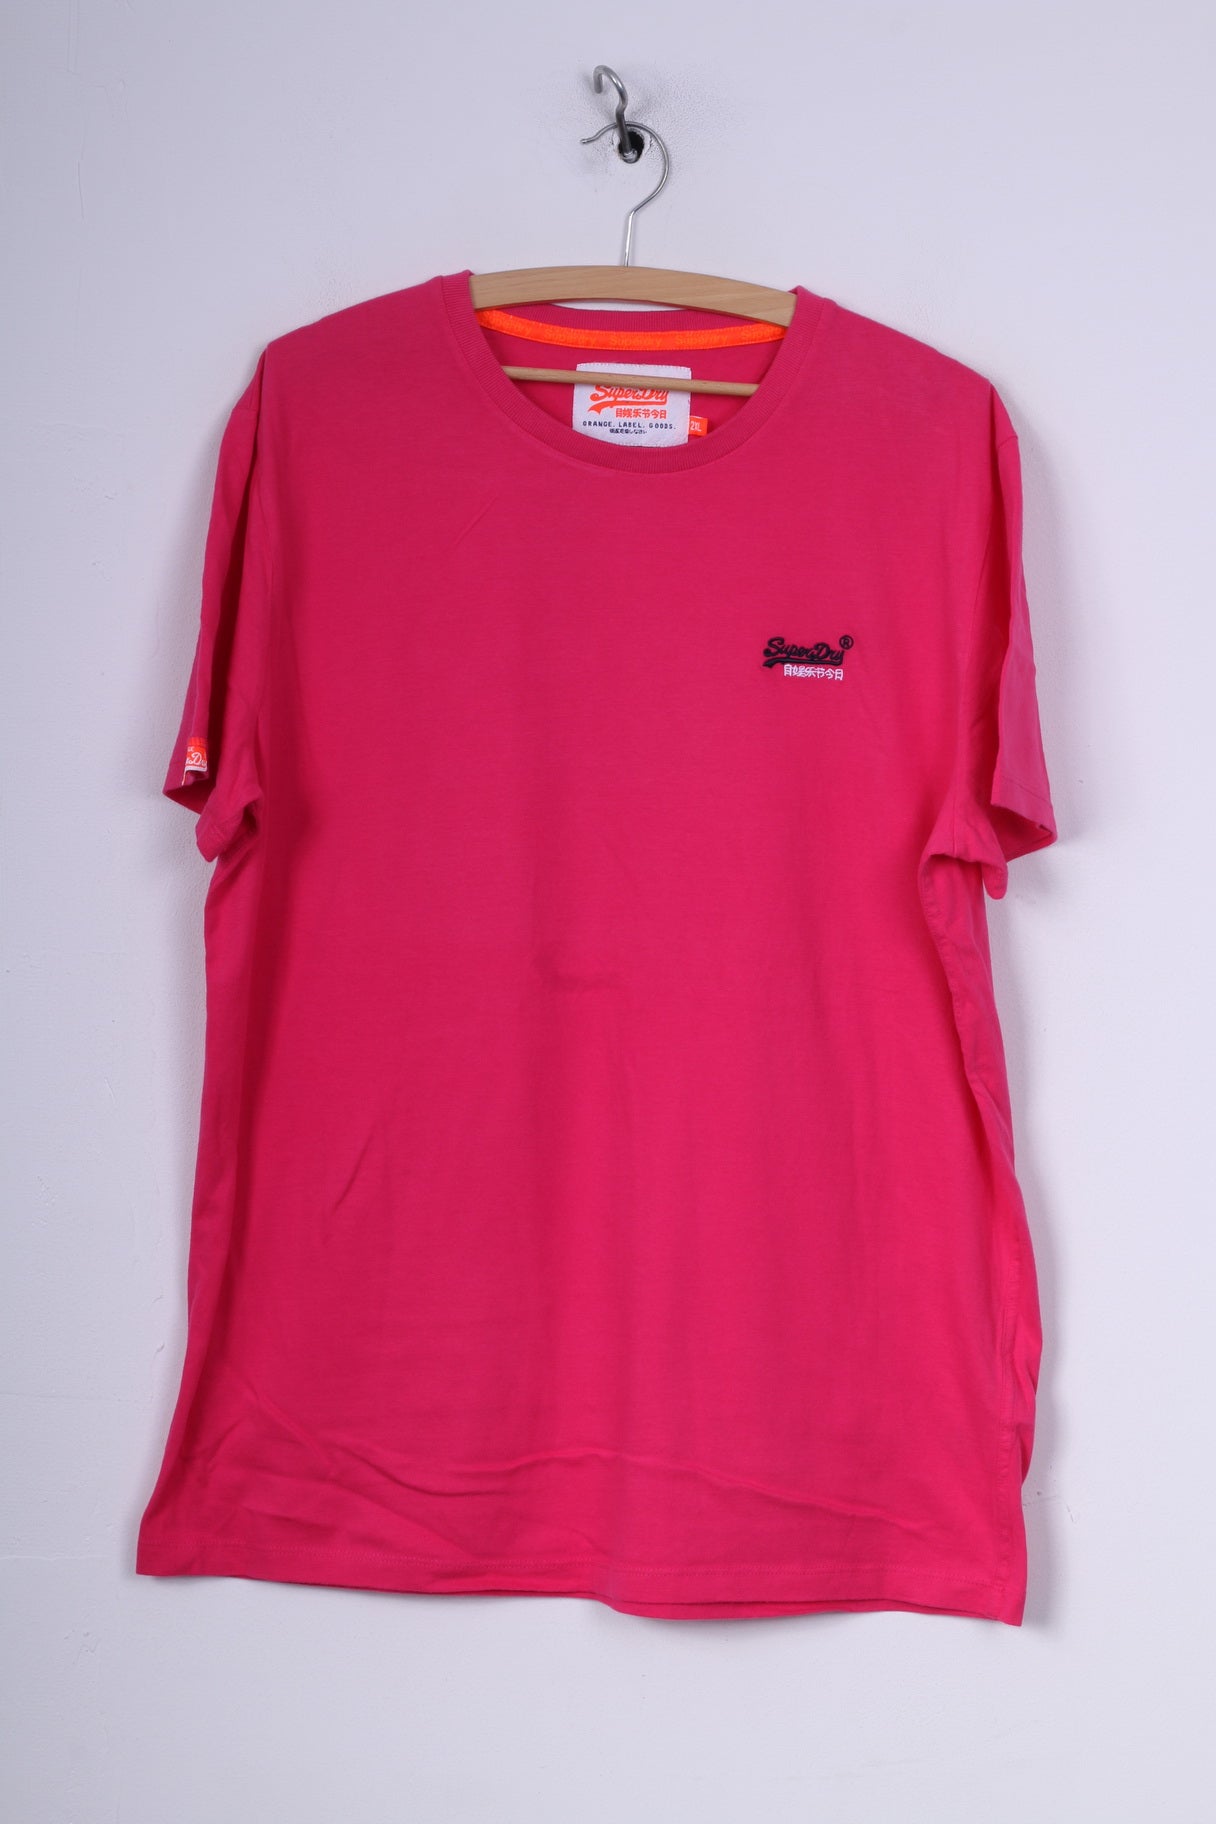 Superdry Mens 2XL (XL) T- Shirt Pink Cotton Orange Label Logo Top